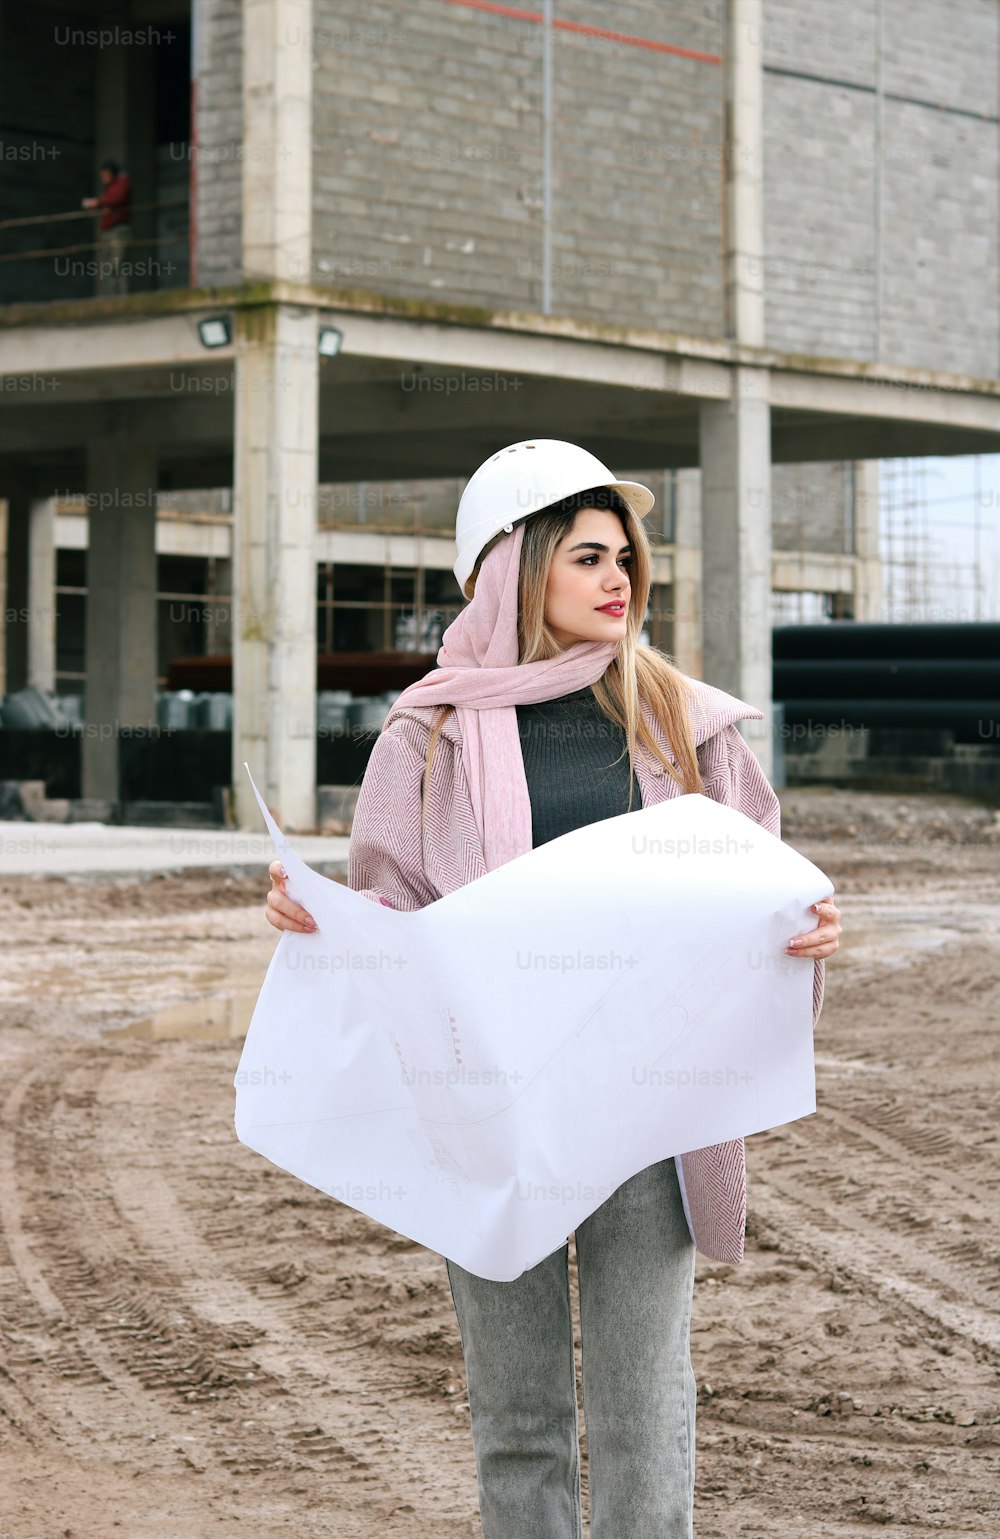 Una mujer sosteniendo un pedazo de papel frente a un edificio